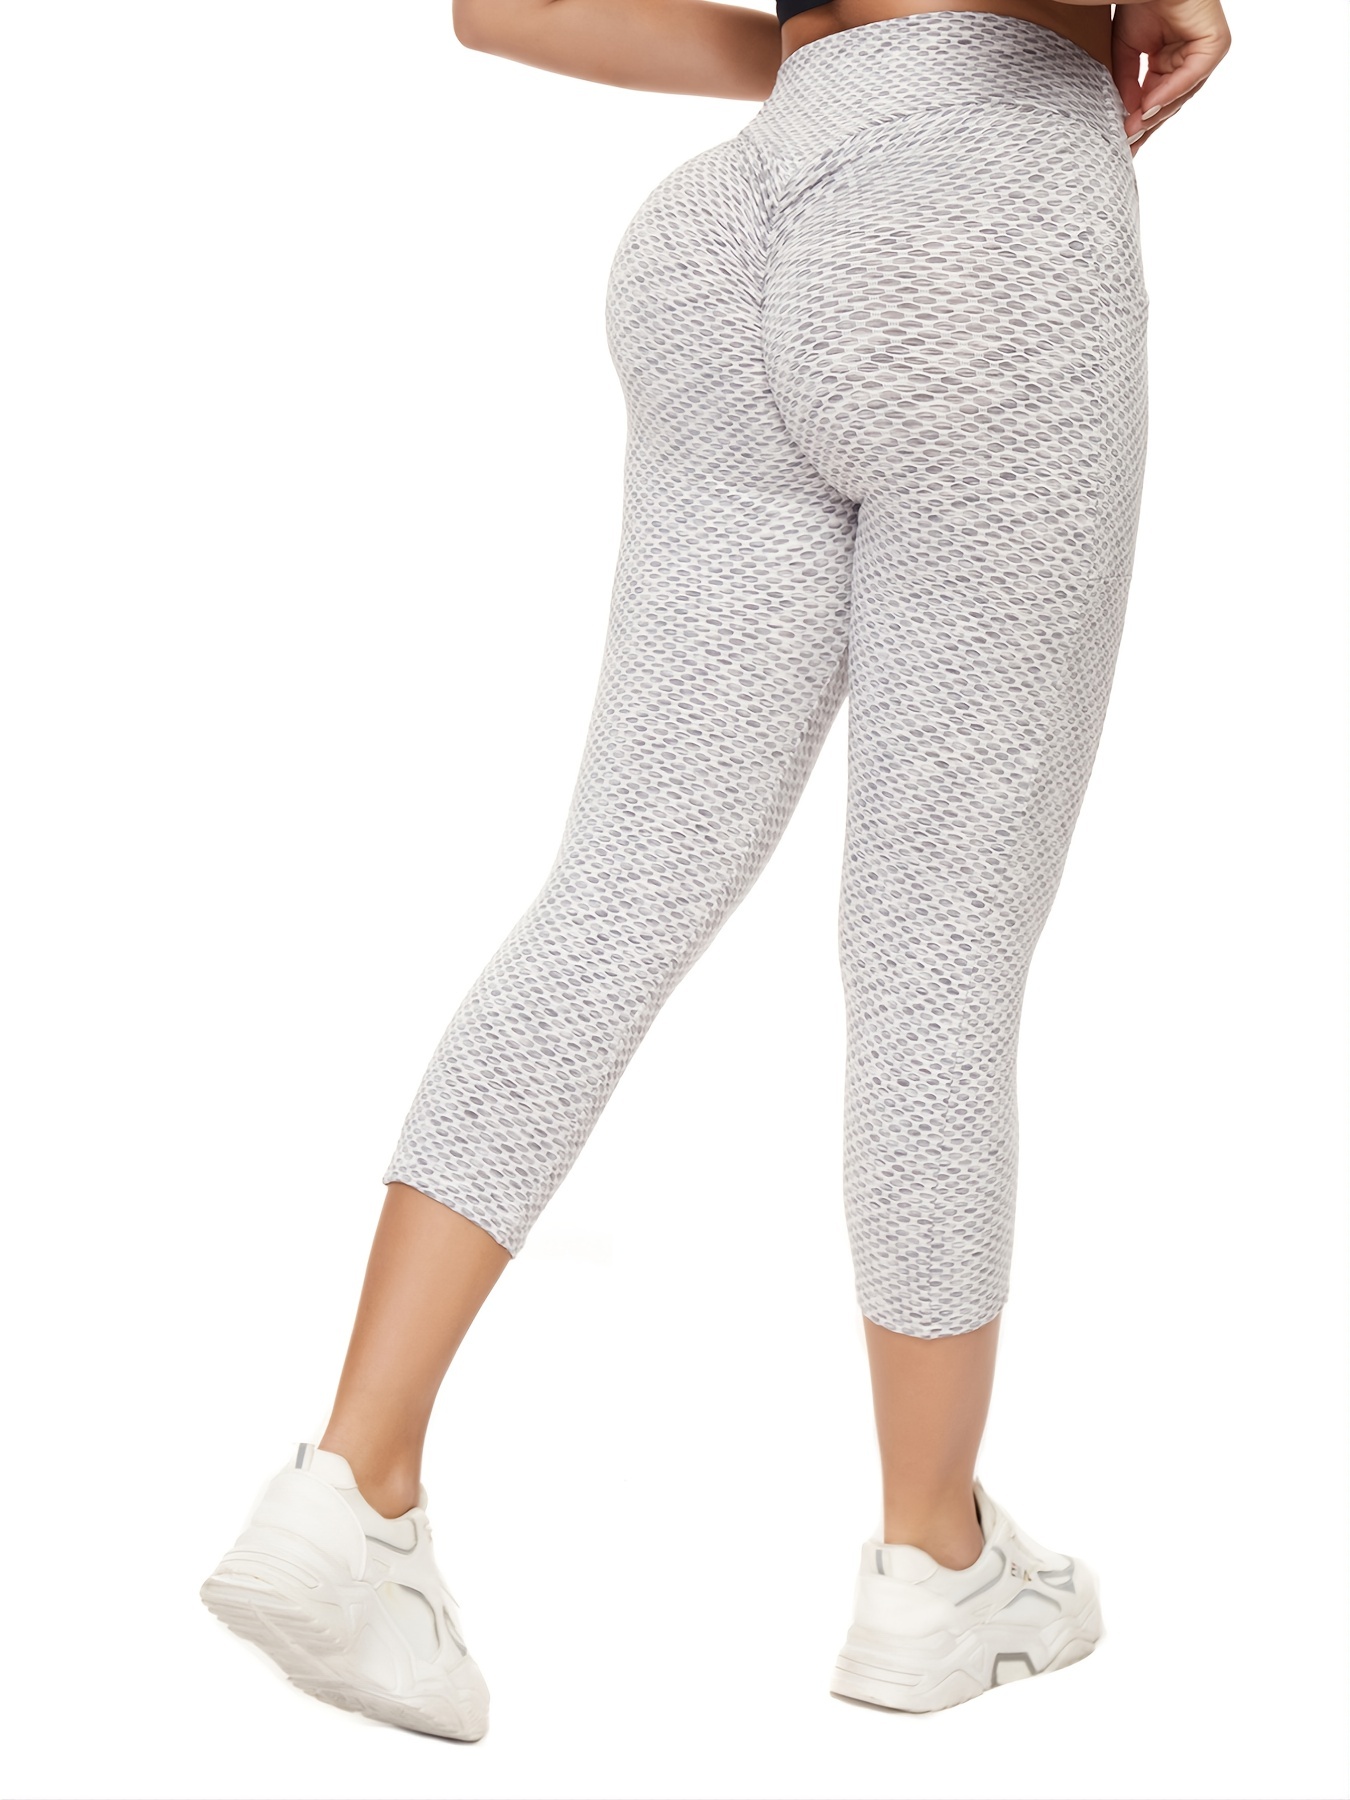 High Waist Honeycomb Yoga Leggings - Textured Corset Design for Women's  Fitness and Activewear